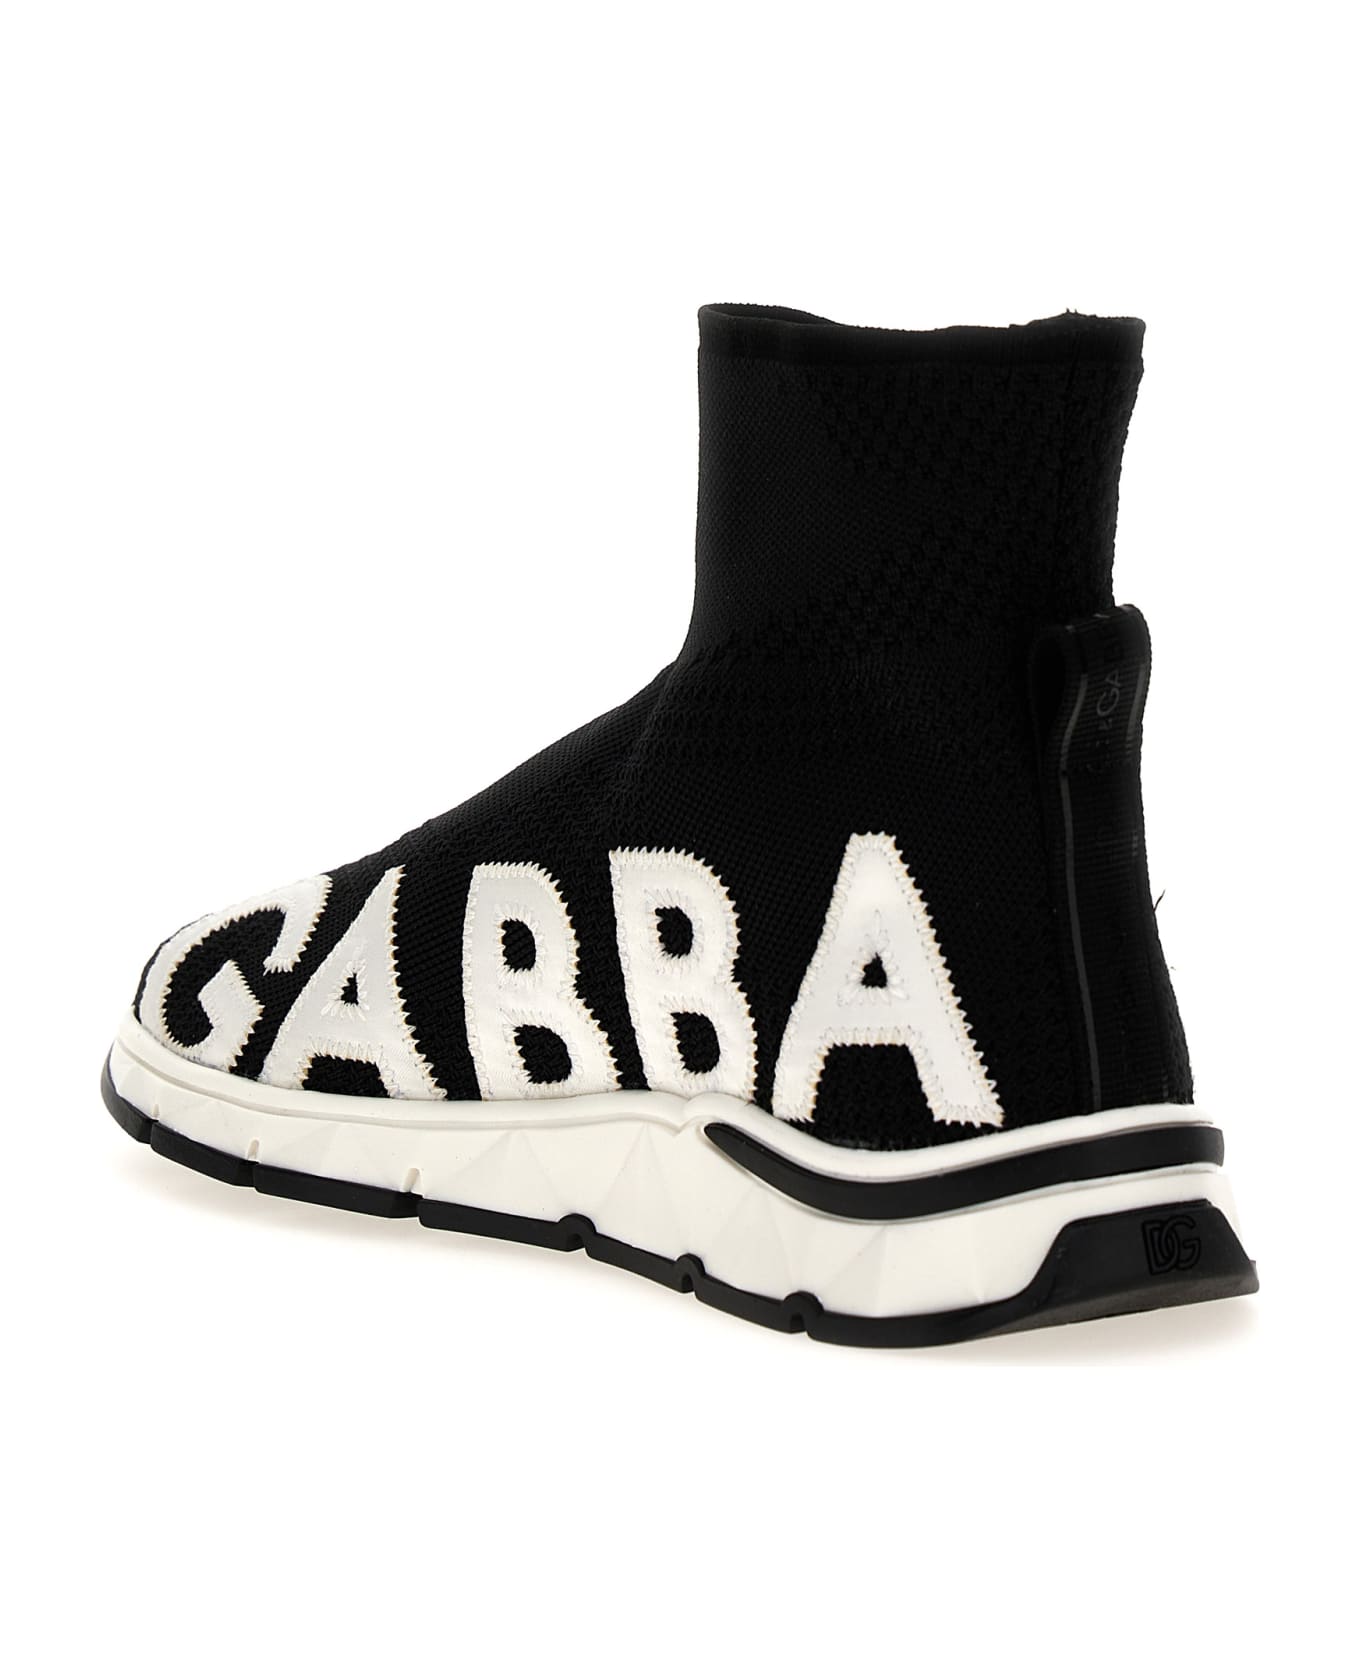 Dolce & Gabbana 'sorrento 2.0' Sneakers - Nero Bianco シューズ